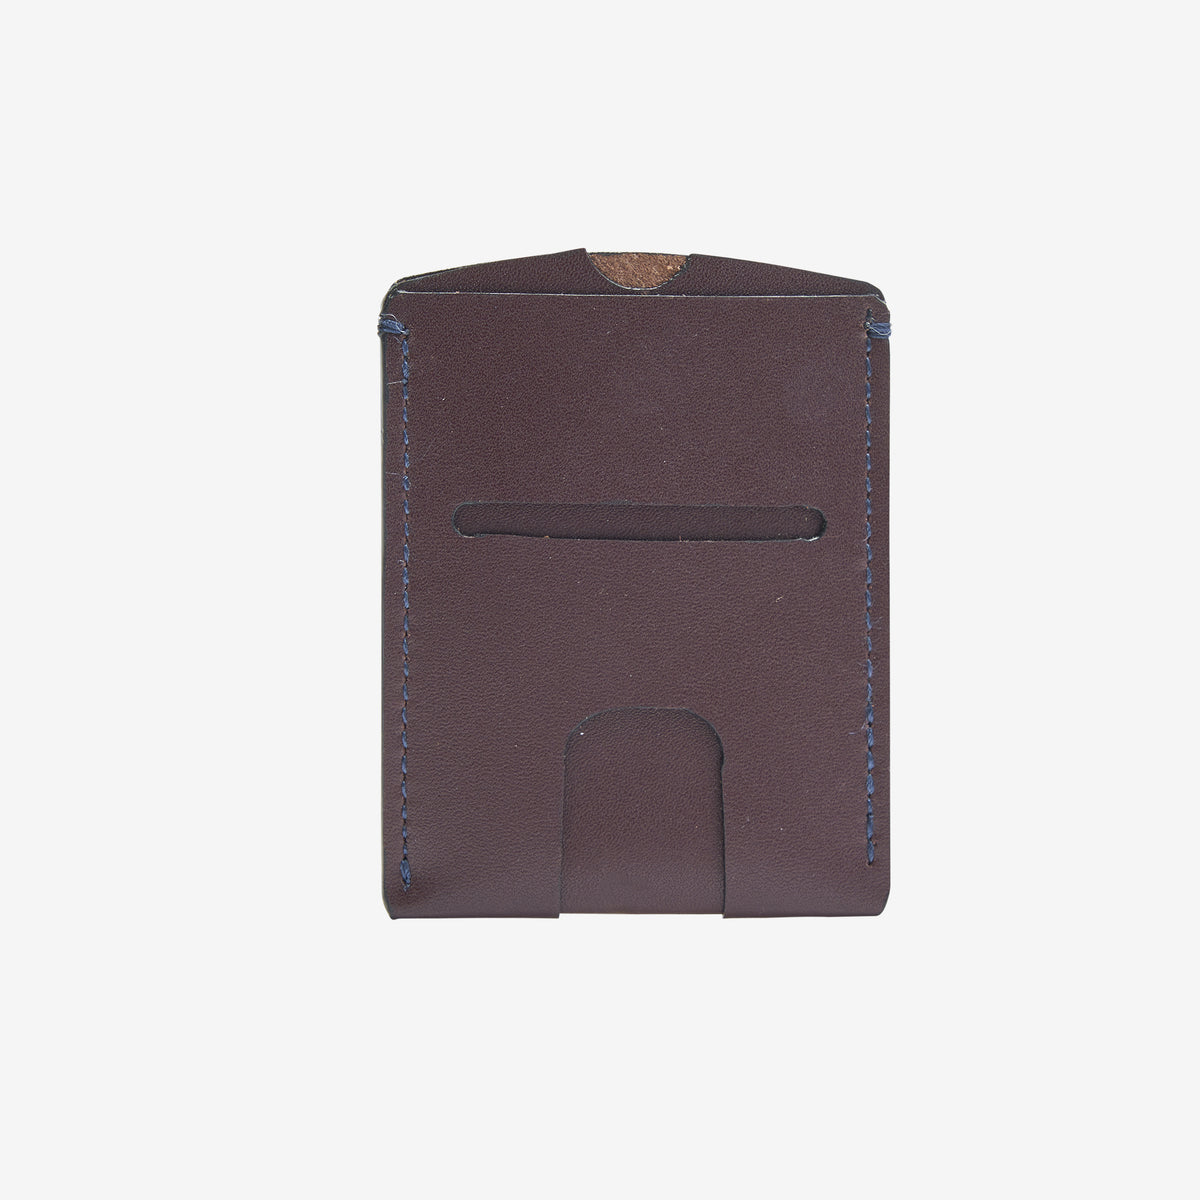 tusk-190-mens-leather-slim-slide-card-case-chocolate-back